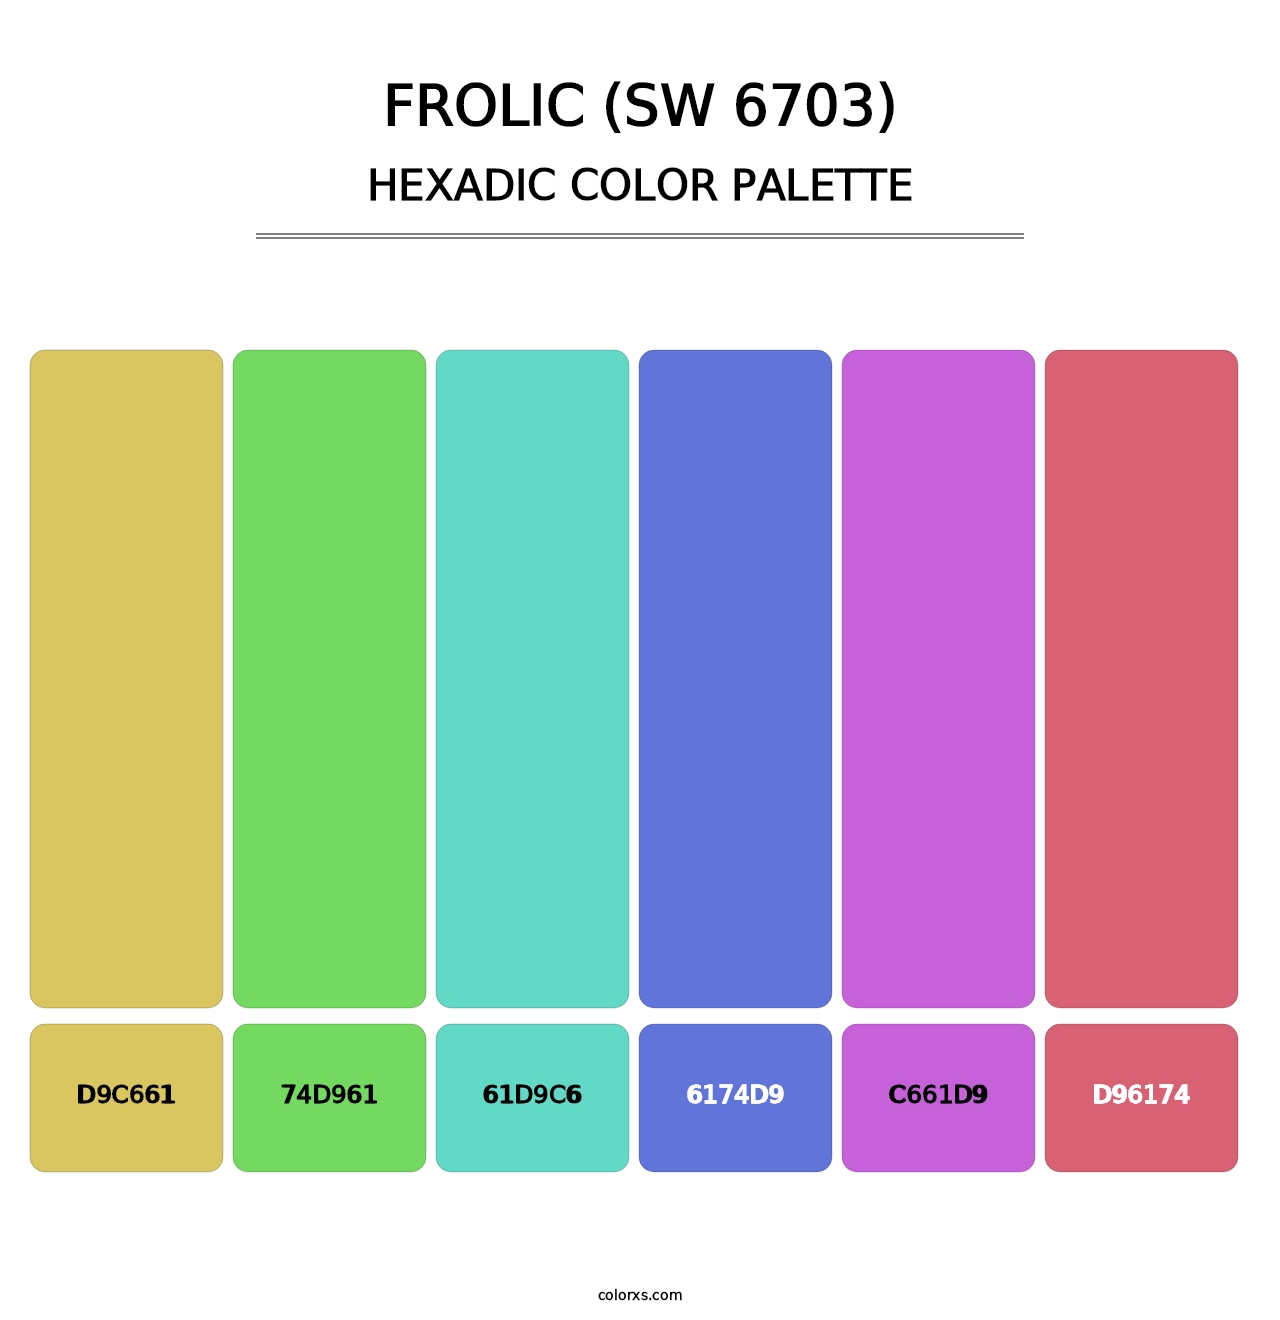 Frolic (SW 6703) - Hexadic Color Palette